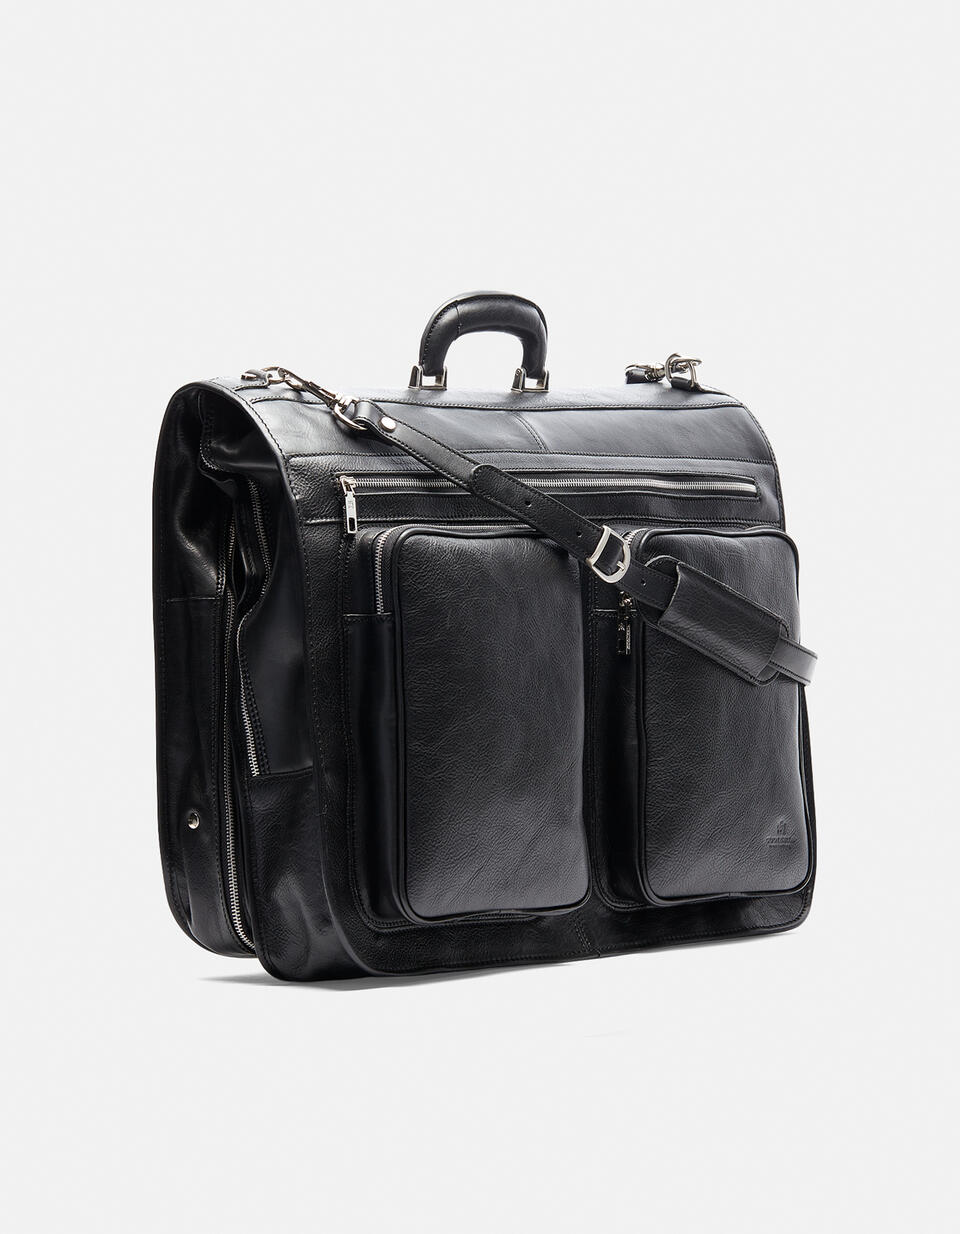 Oxford travel garment bag in vegetable tanned leather - Luggage | TRAVEL BAGS  - Luggage | TRAVEL BAGSCuoieria Fiorentina